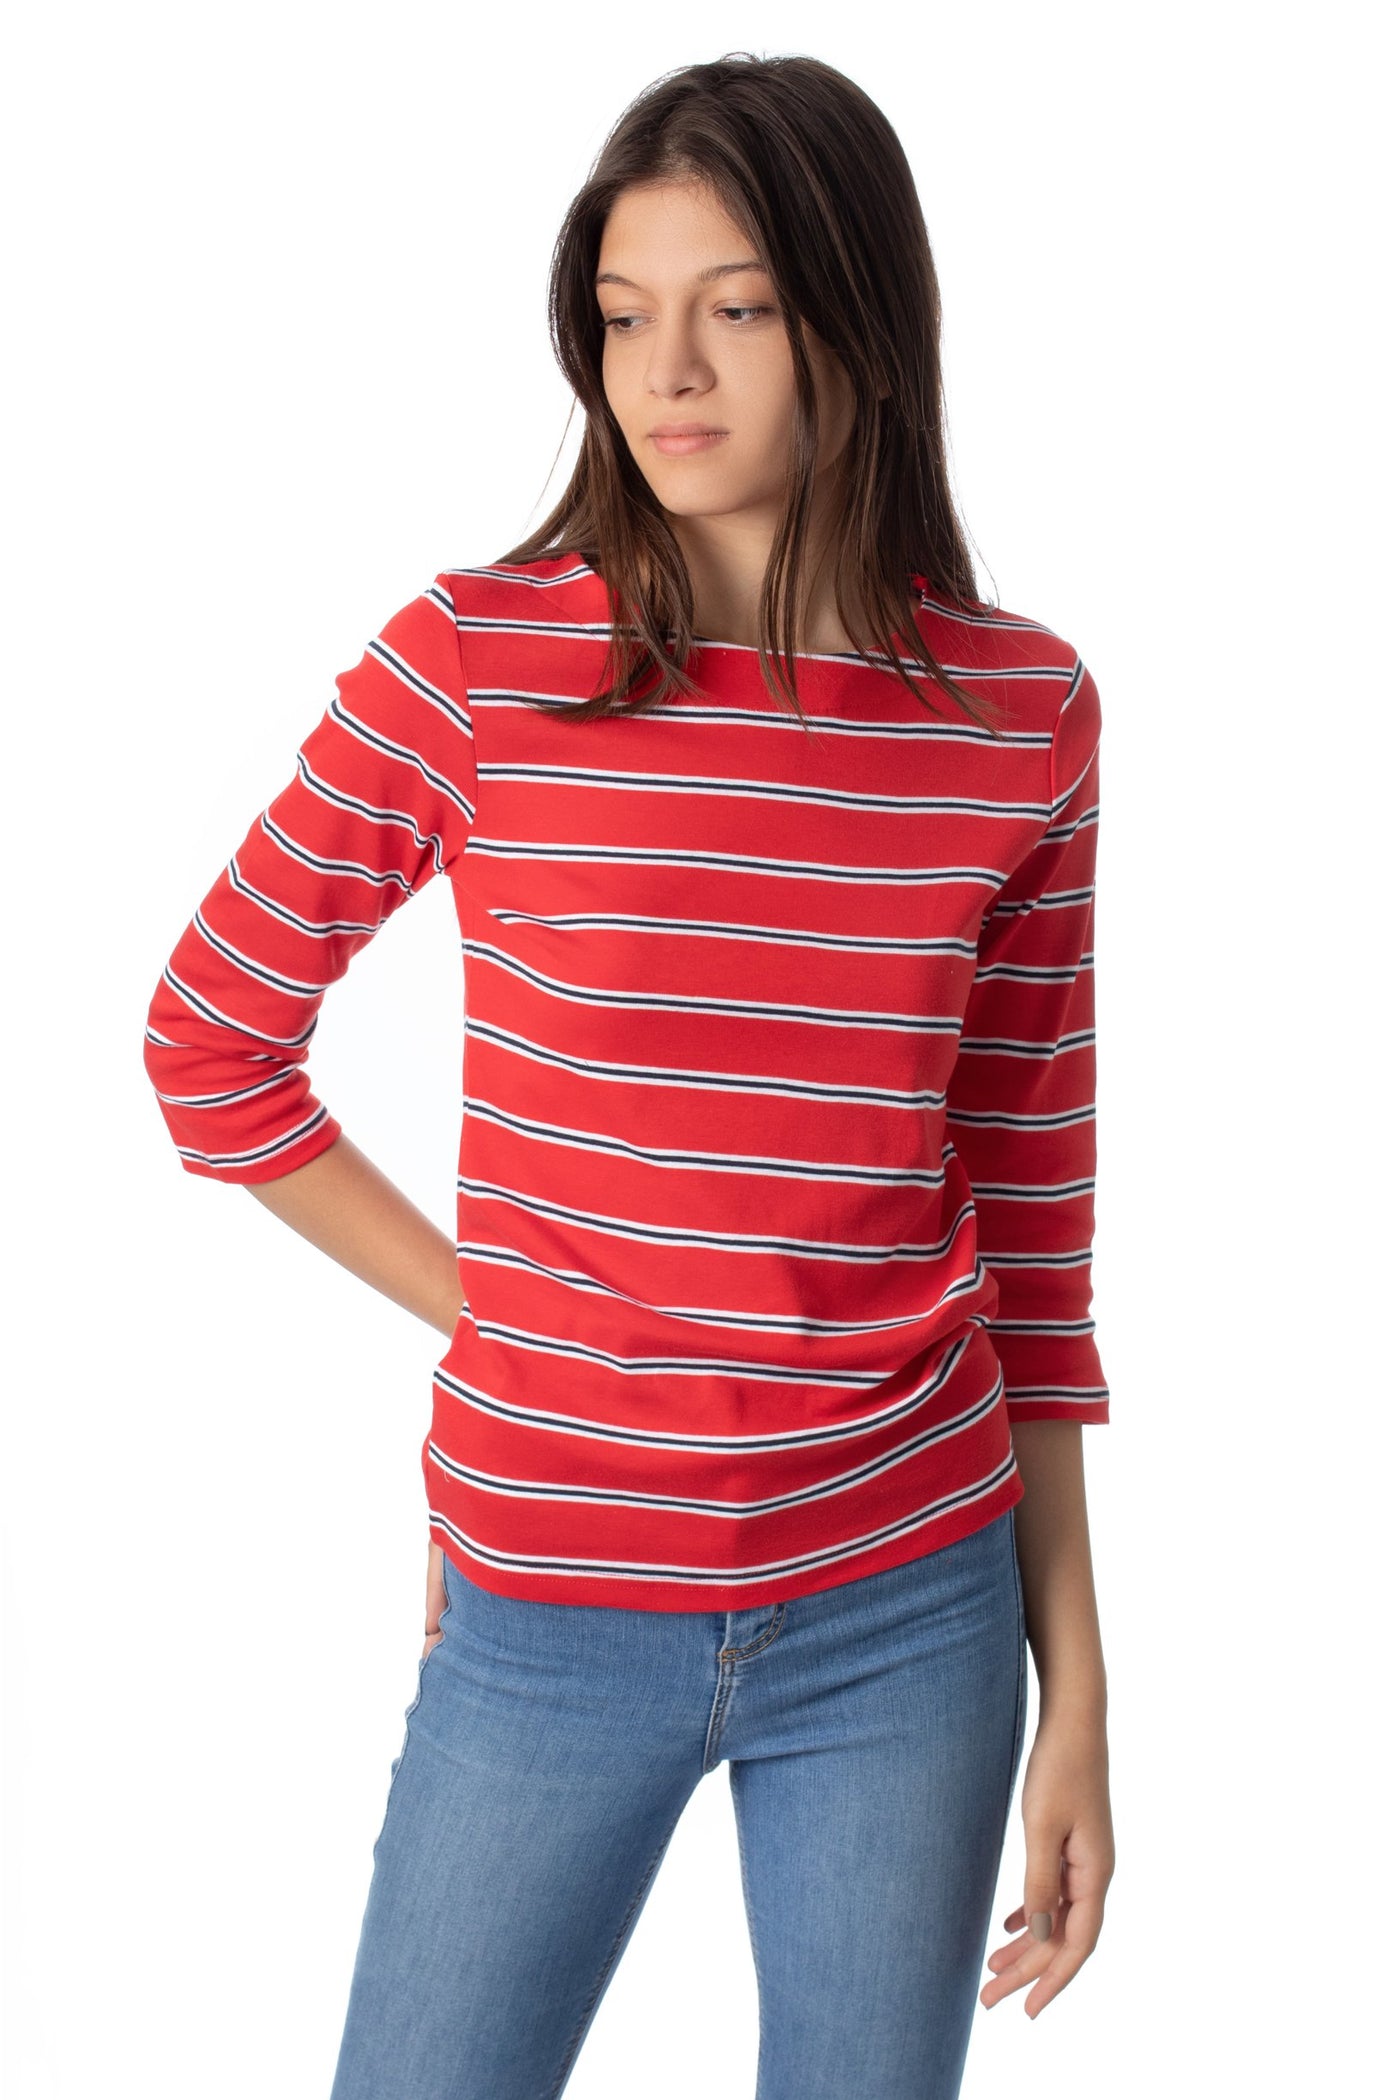 chassca crew-neck stripe 3/4 sleeve t-shirt - Breakmood